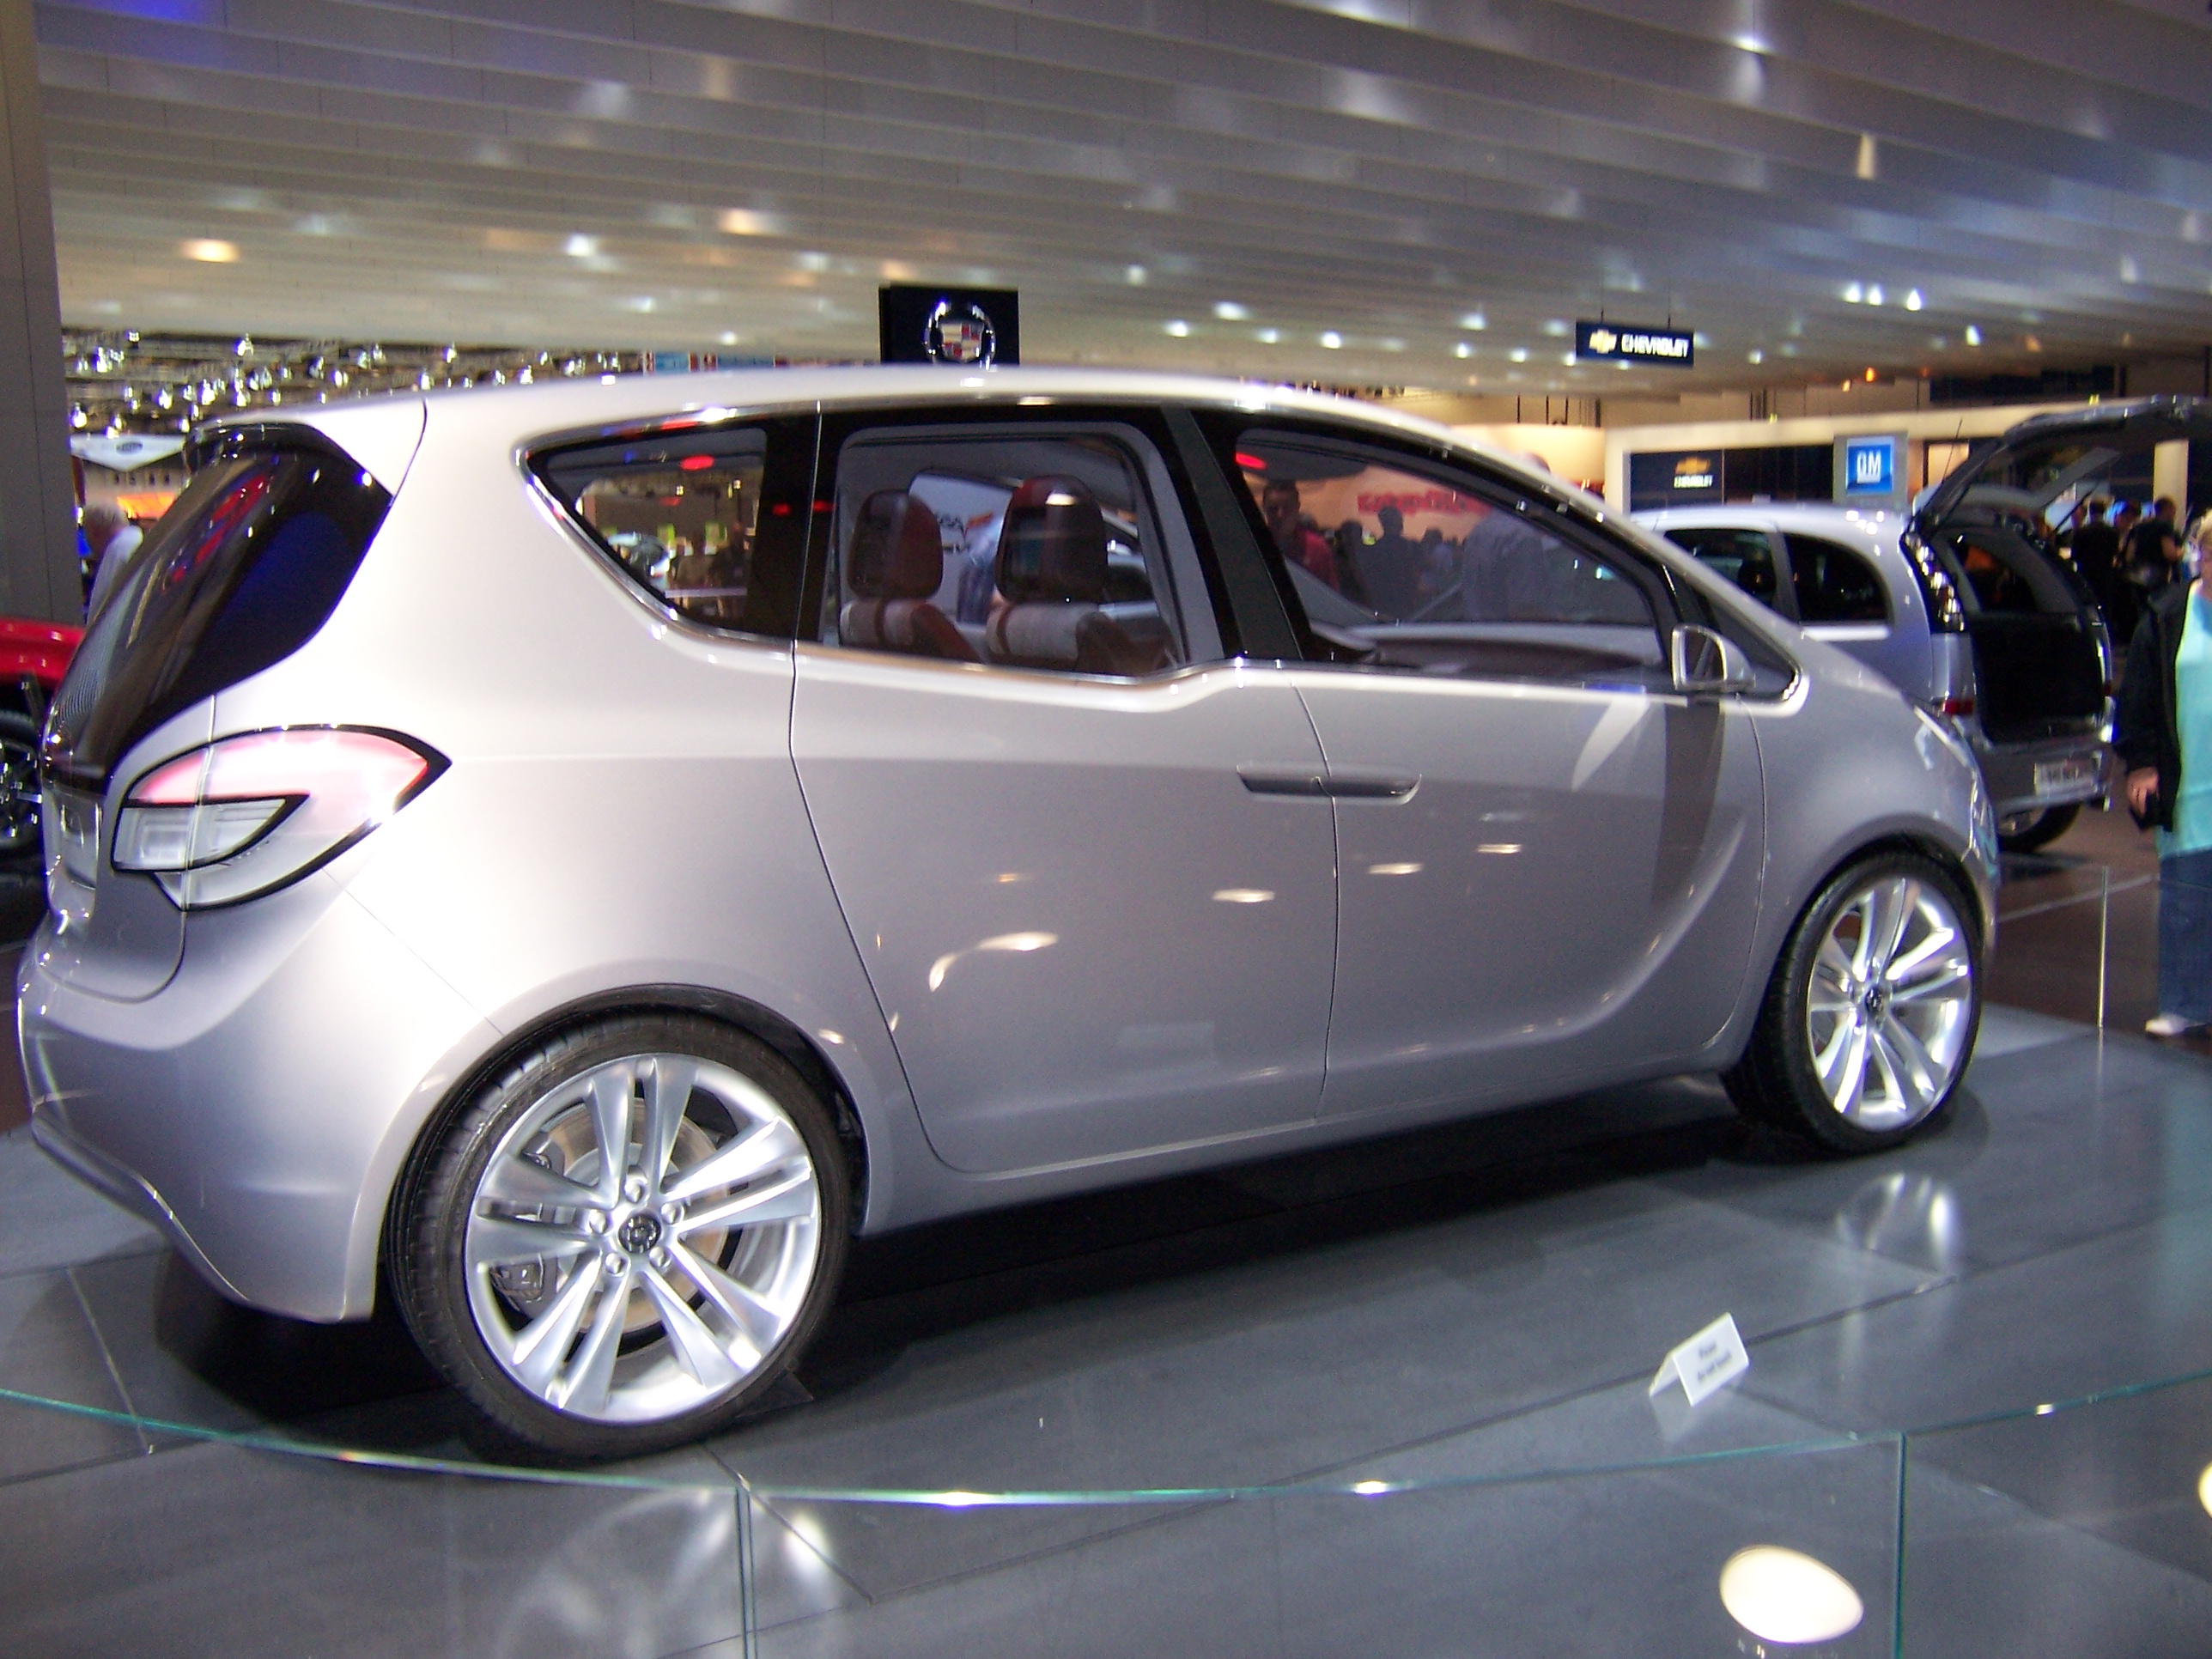 File:Vauxhall Meriva Concept - Flickr - Alan D.jpg - Wikipedia